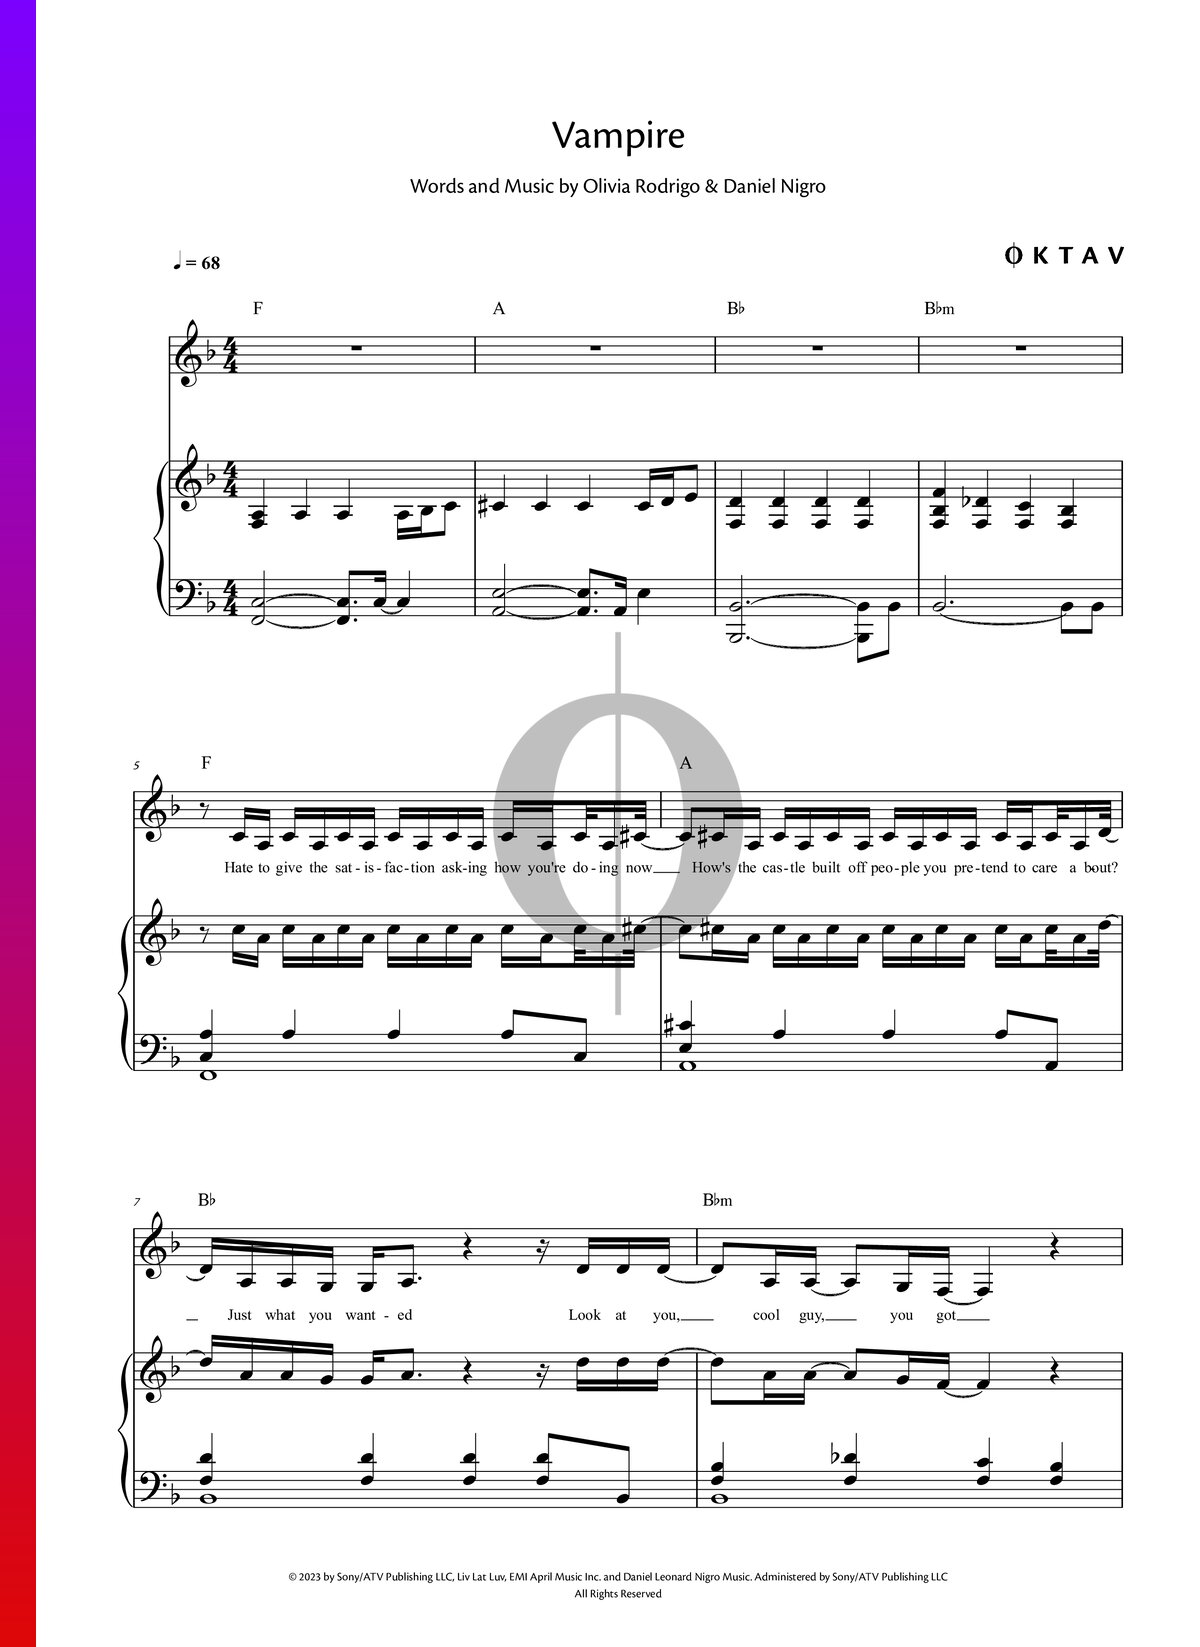 Vampire Sheet Music (Piano, Voice) - OKTAV